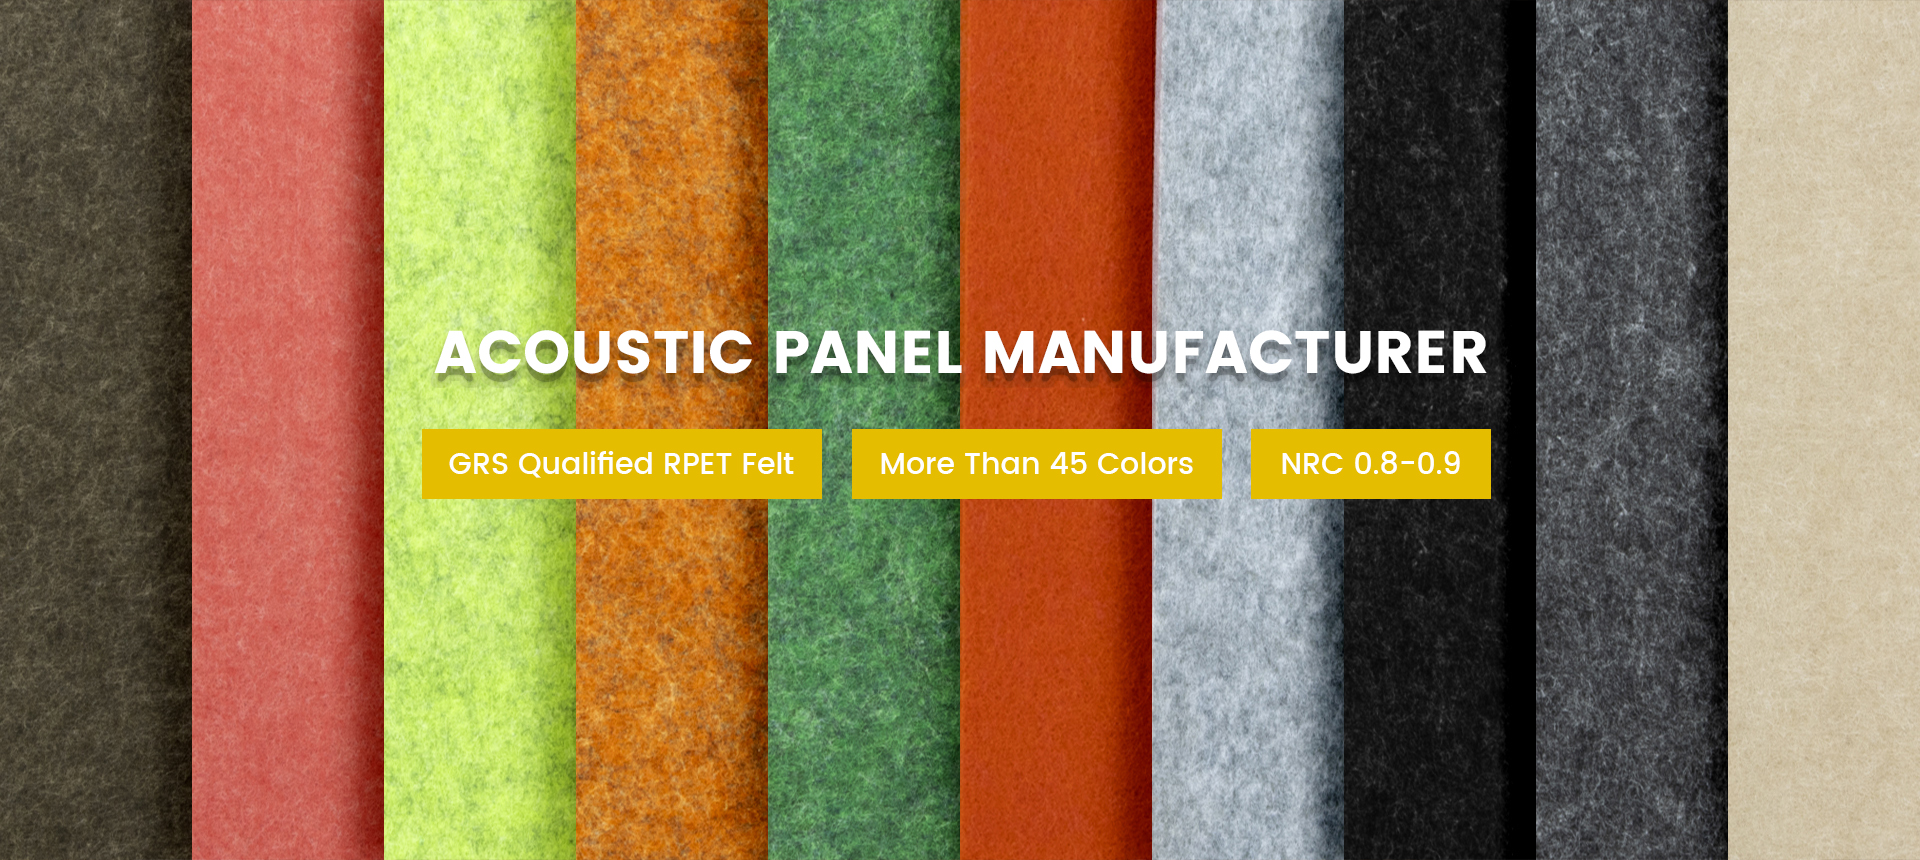 Acoustic Panels Manufacturer